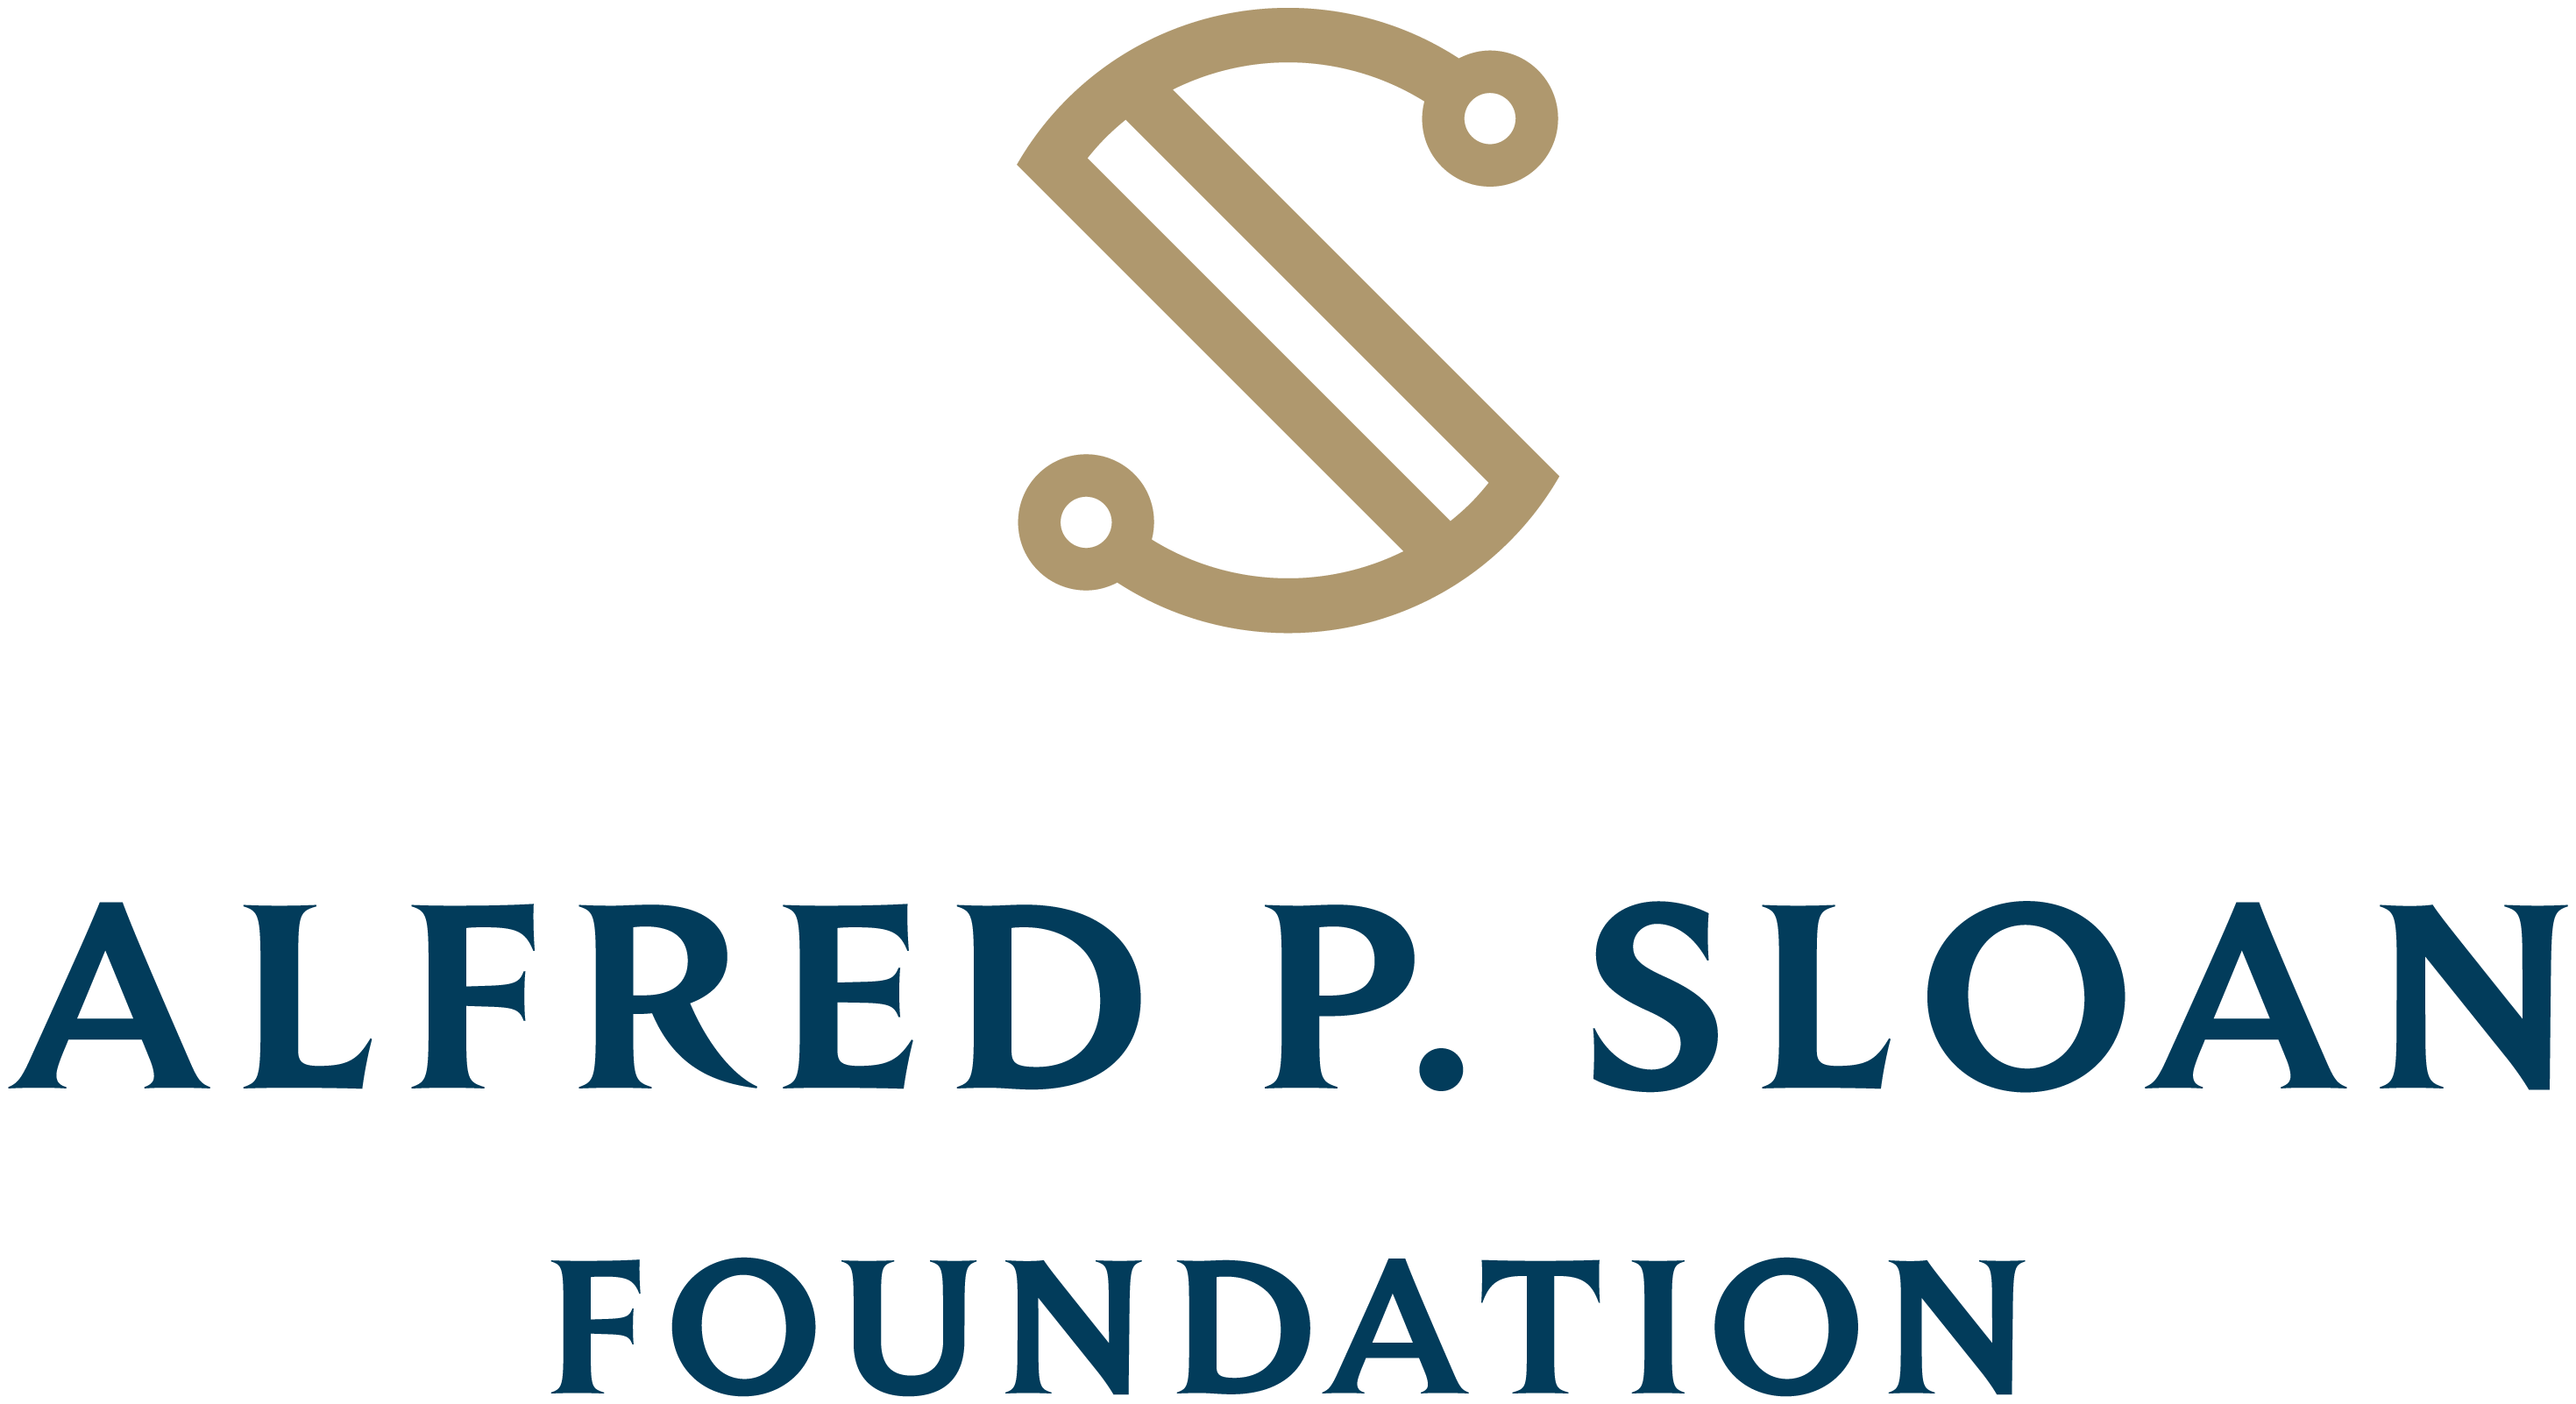 The Sloan Foundation logo.